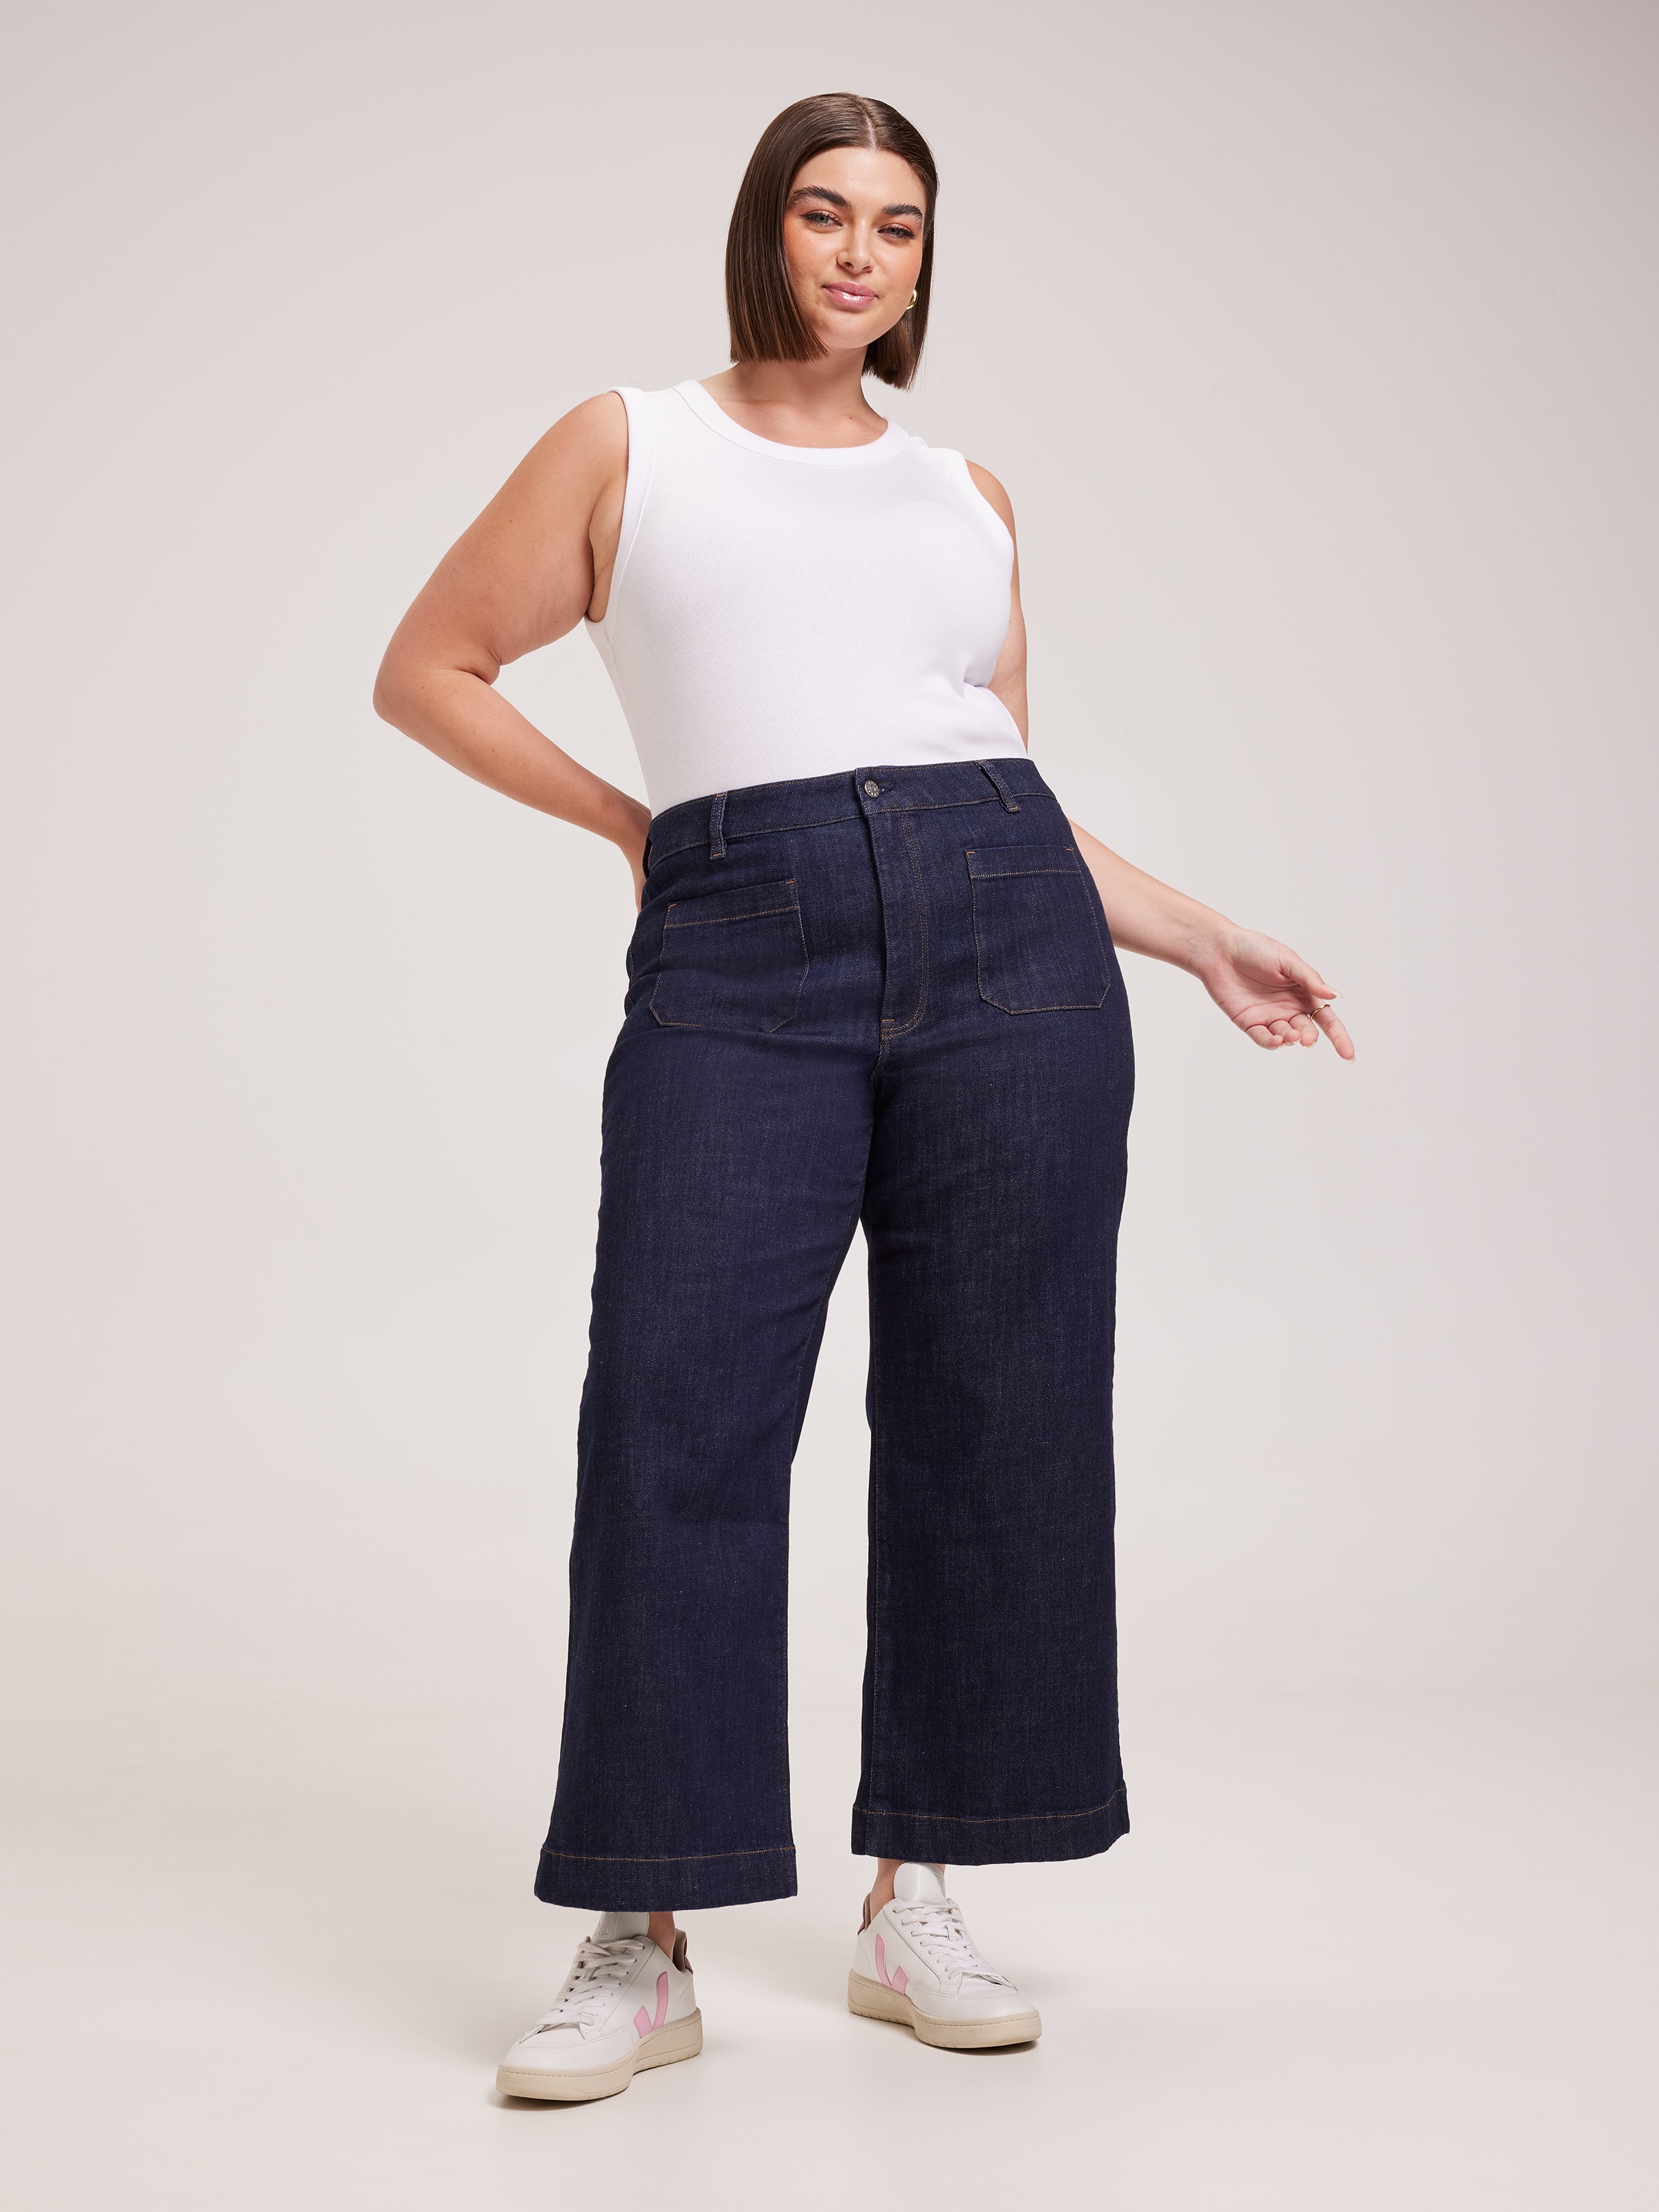 Plus Size High Waisted Jeans Australia